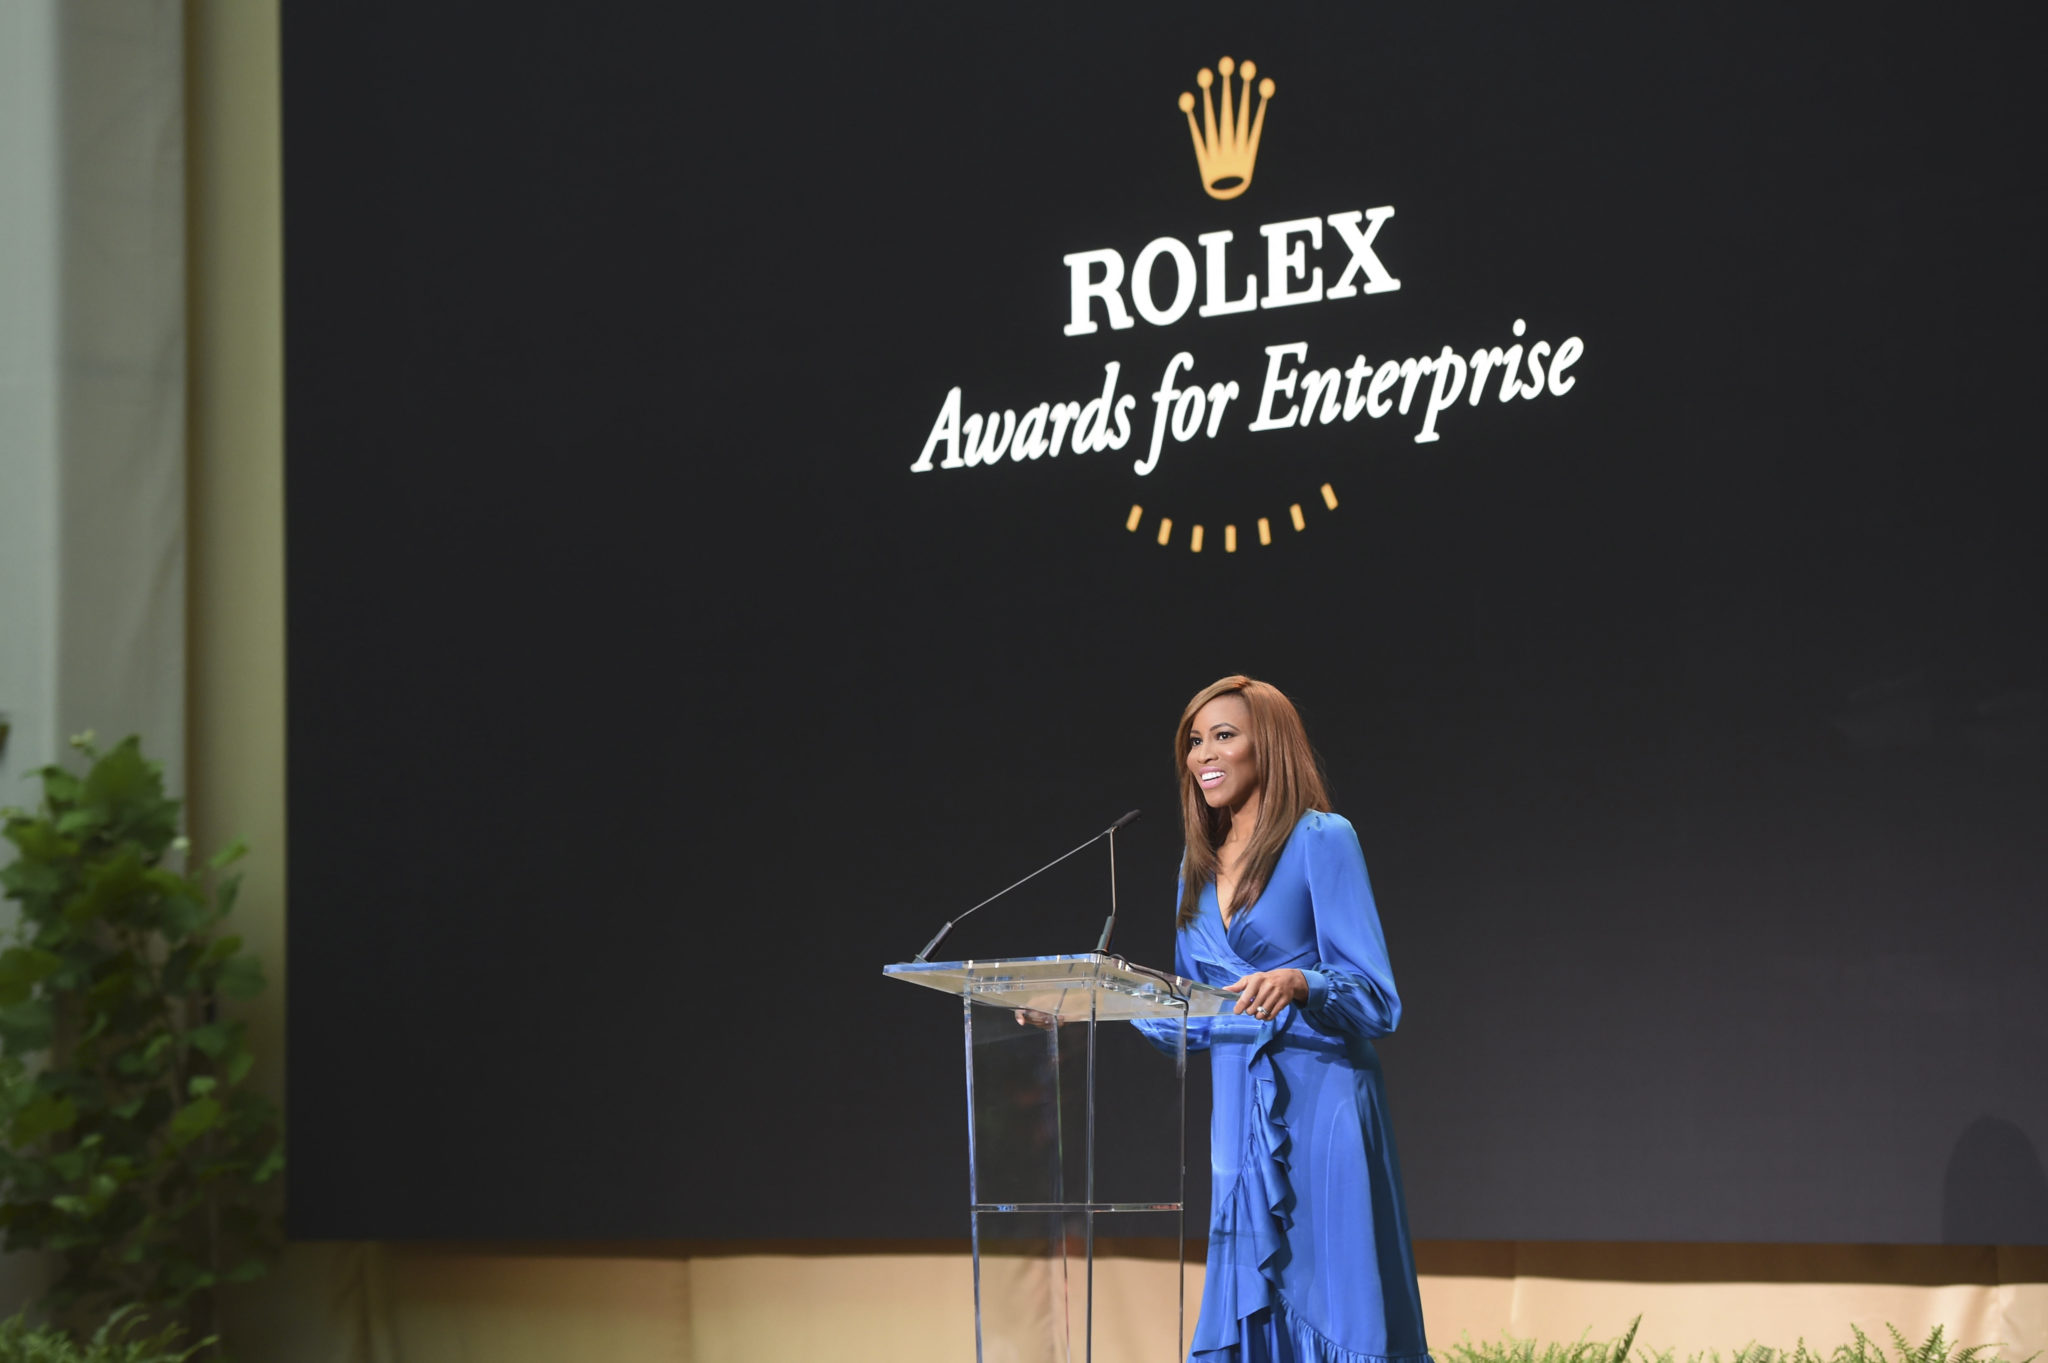 Rolex Awards for Enterprise 2021 (Up to 200,000 Swiss Francs)